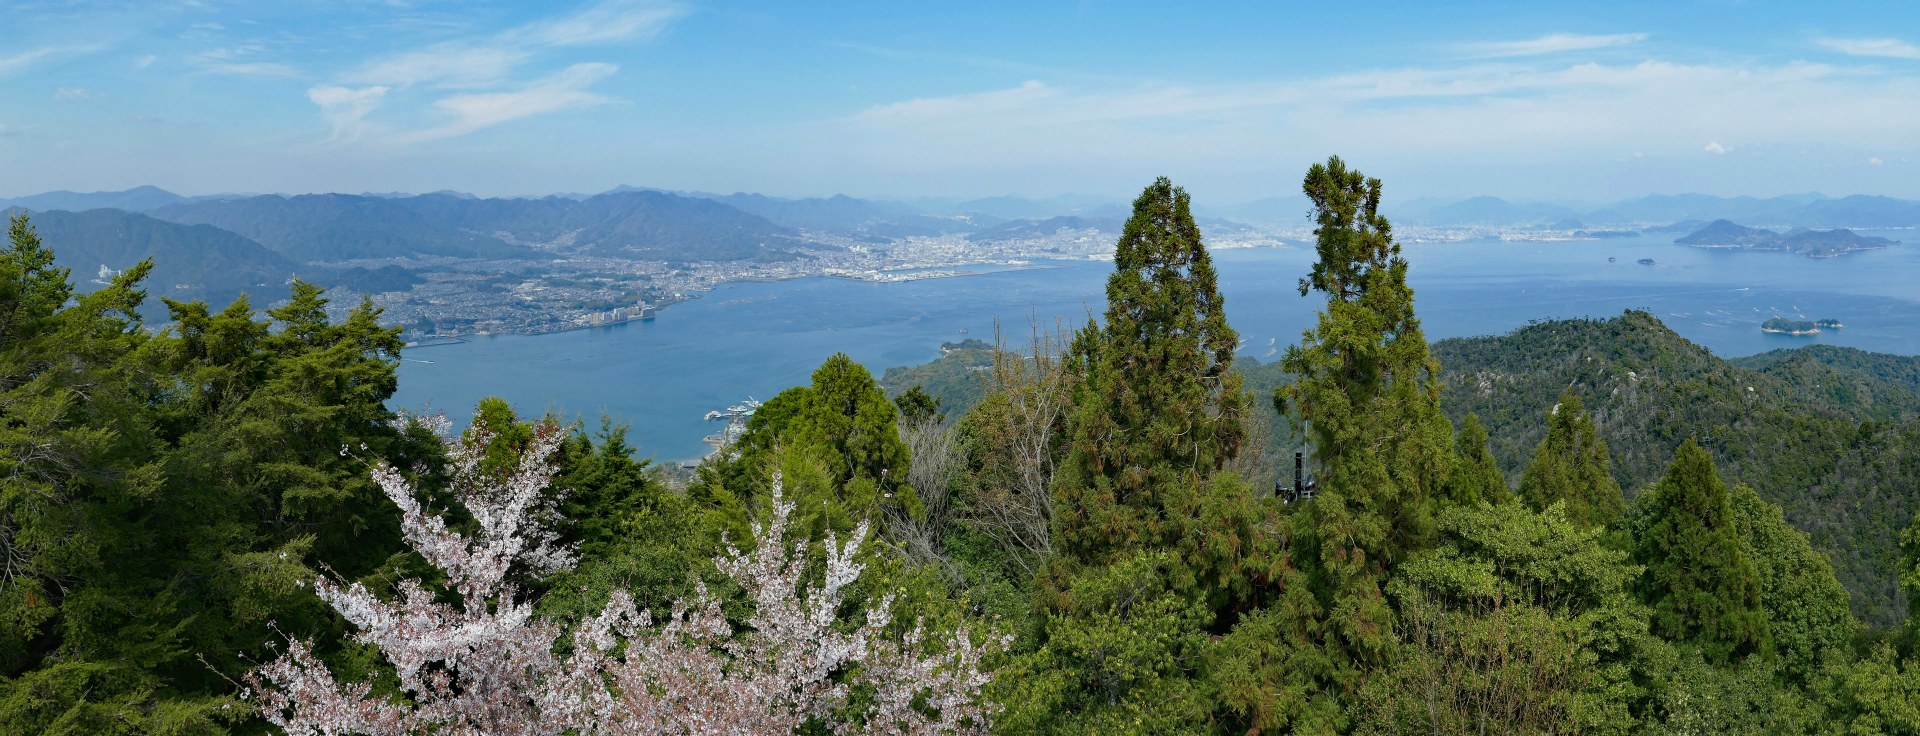 View from Mount Misen, Miyajima Island